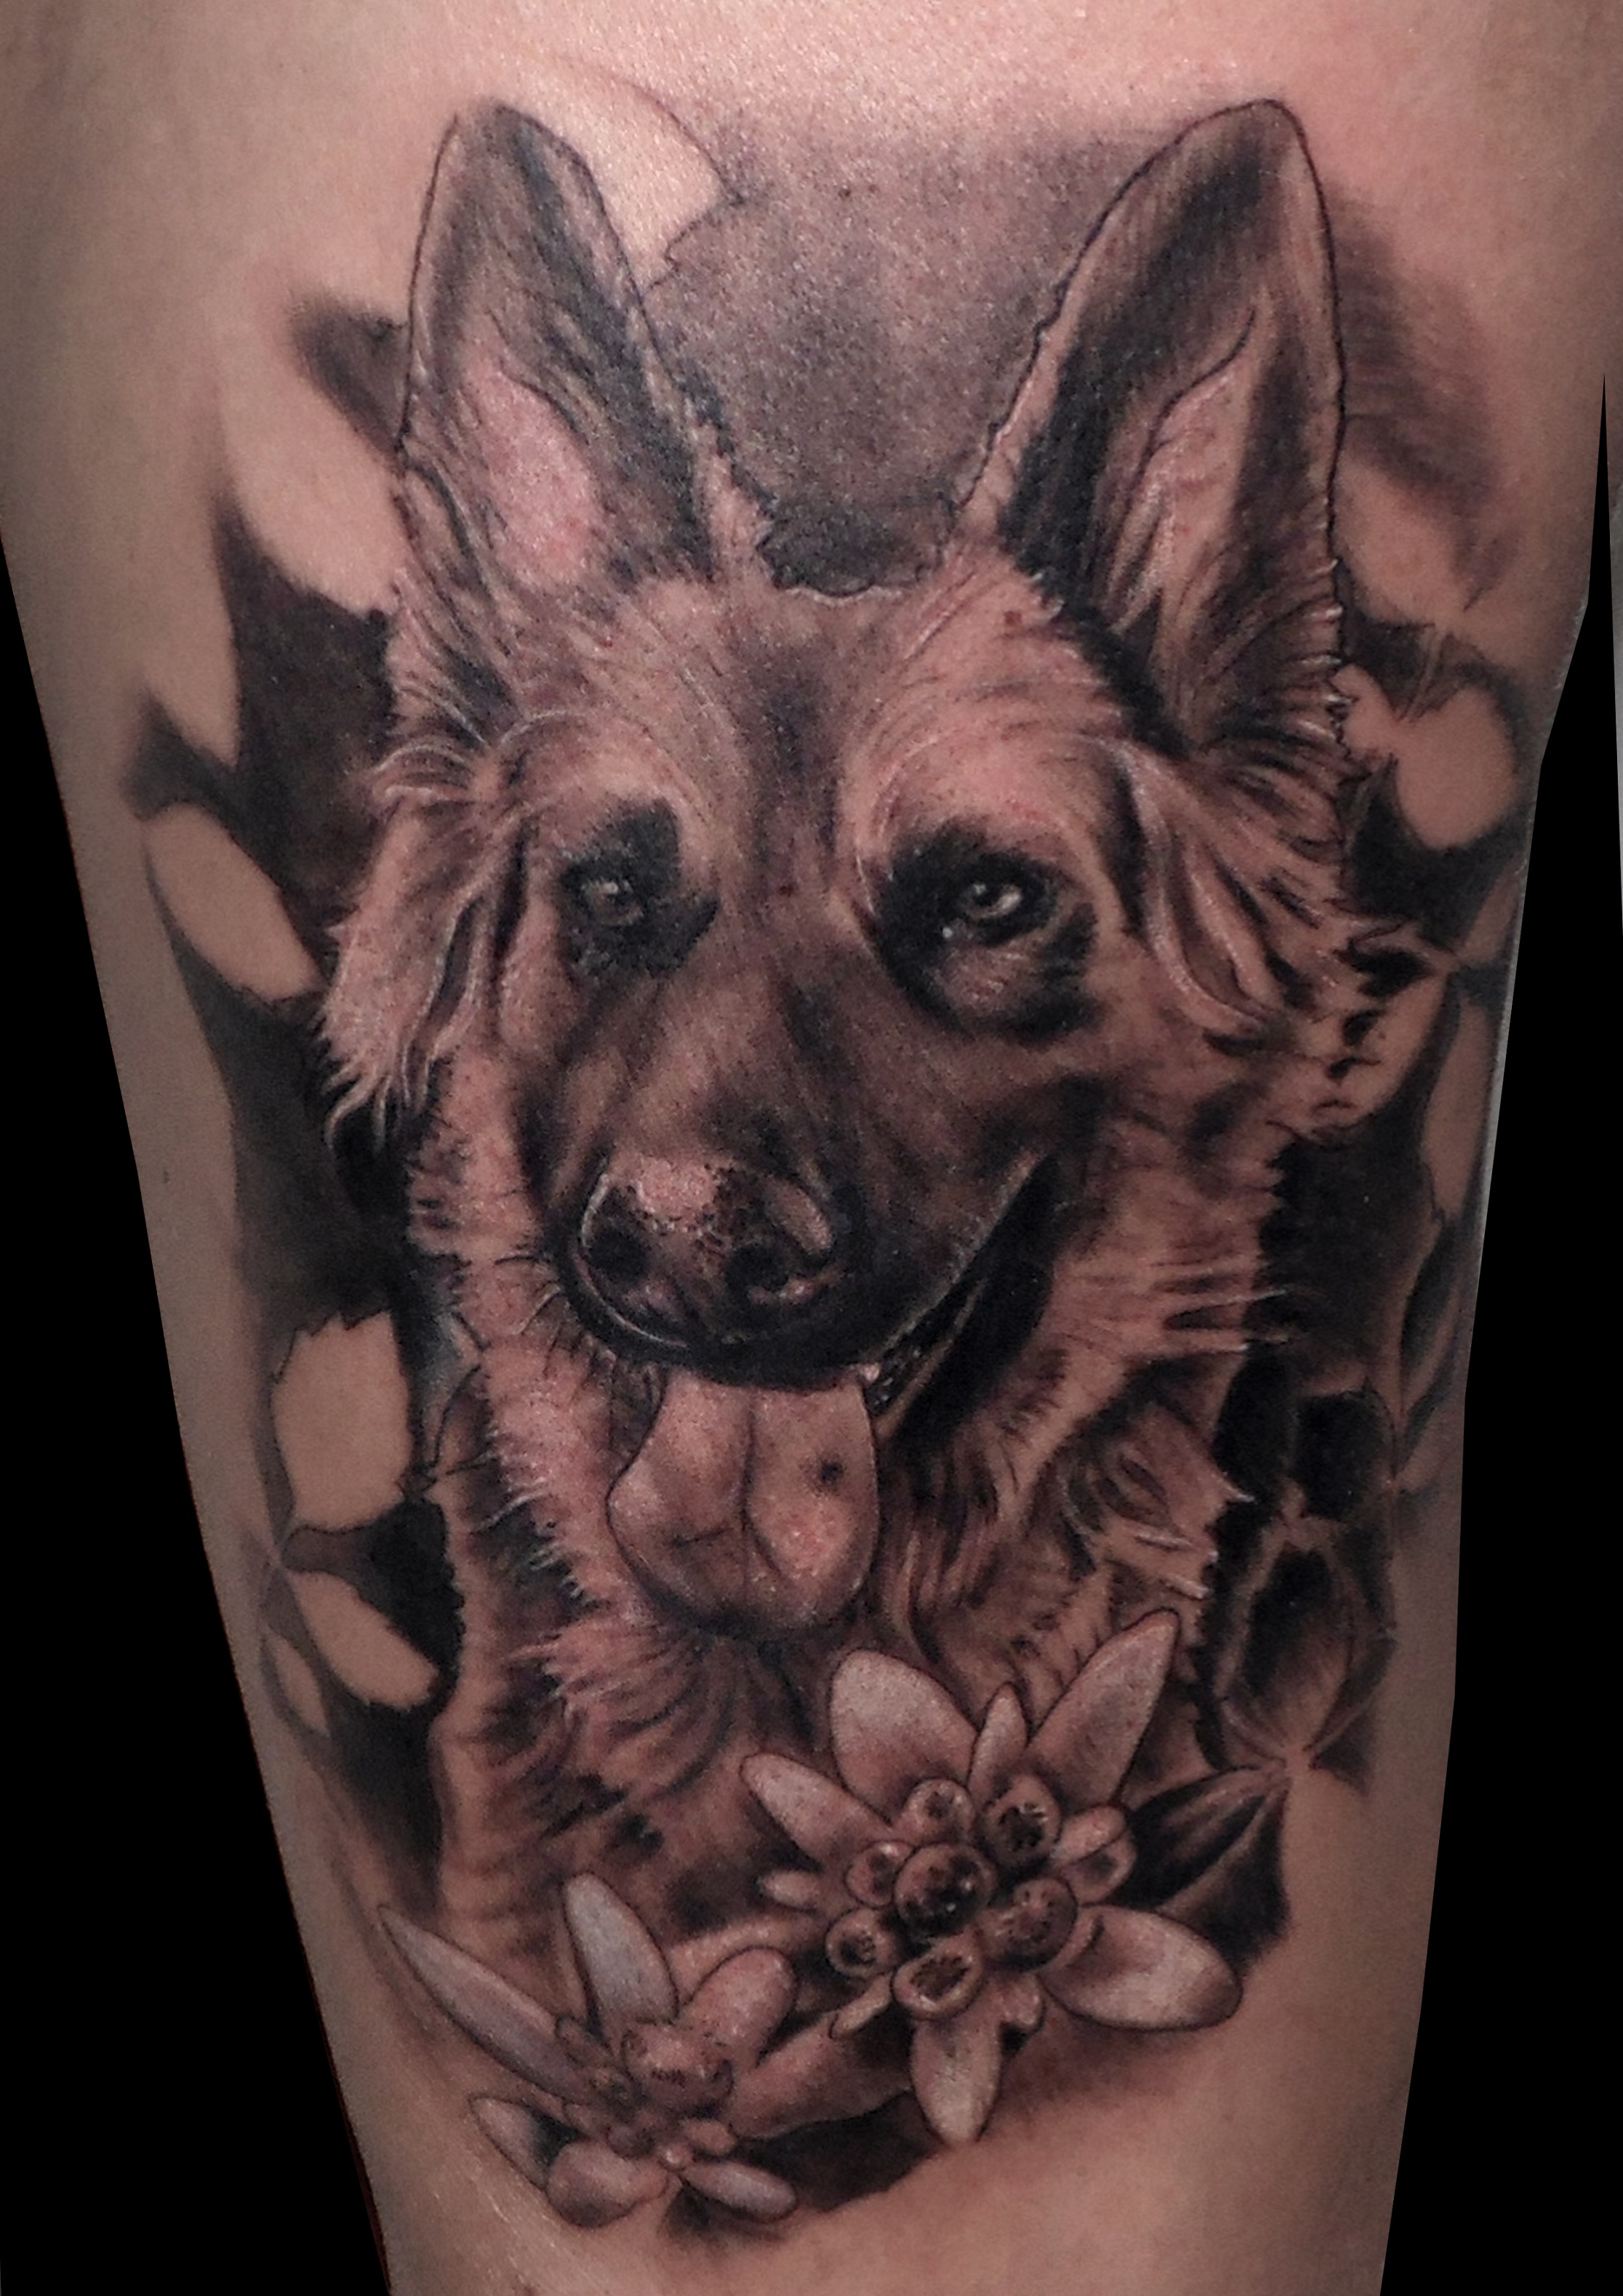 tatuaje tattoo retrato perro realista blanco negro pierna muslo 13depicas Jaca Huesca